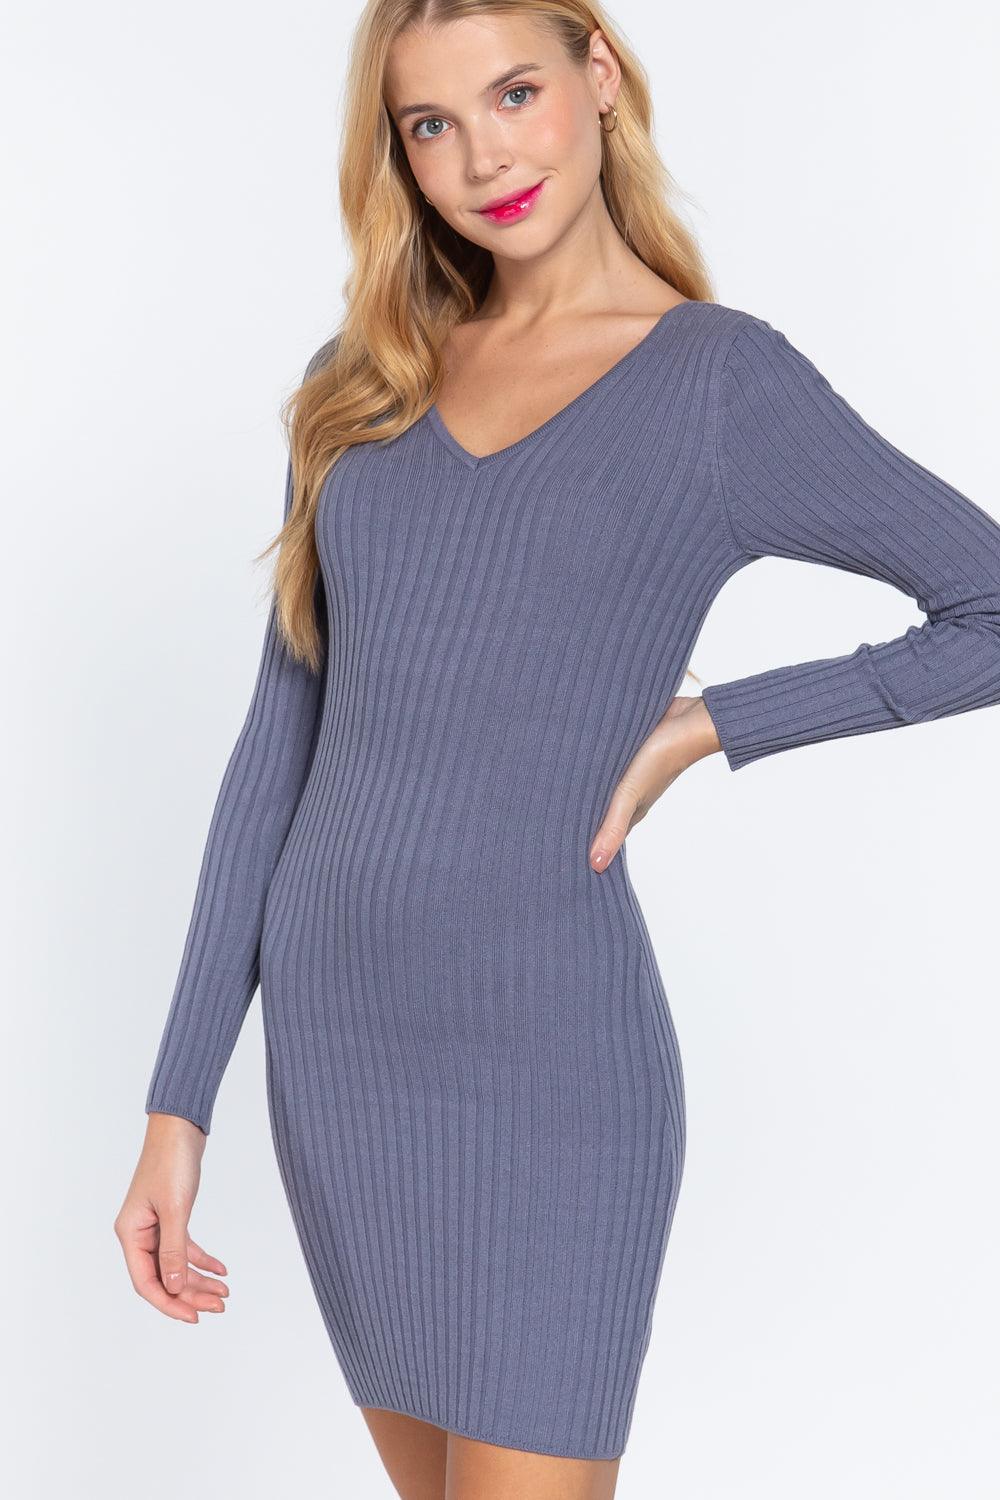 Long Slv V-neck Sweater Mini Dress Naughty Smile Fashion